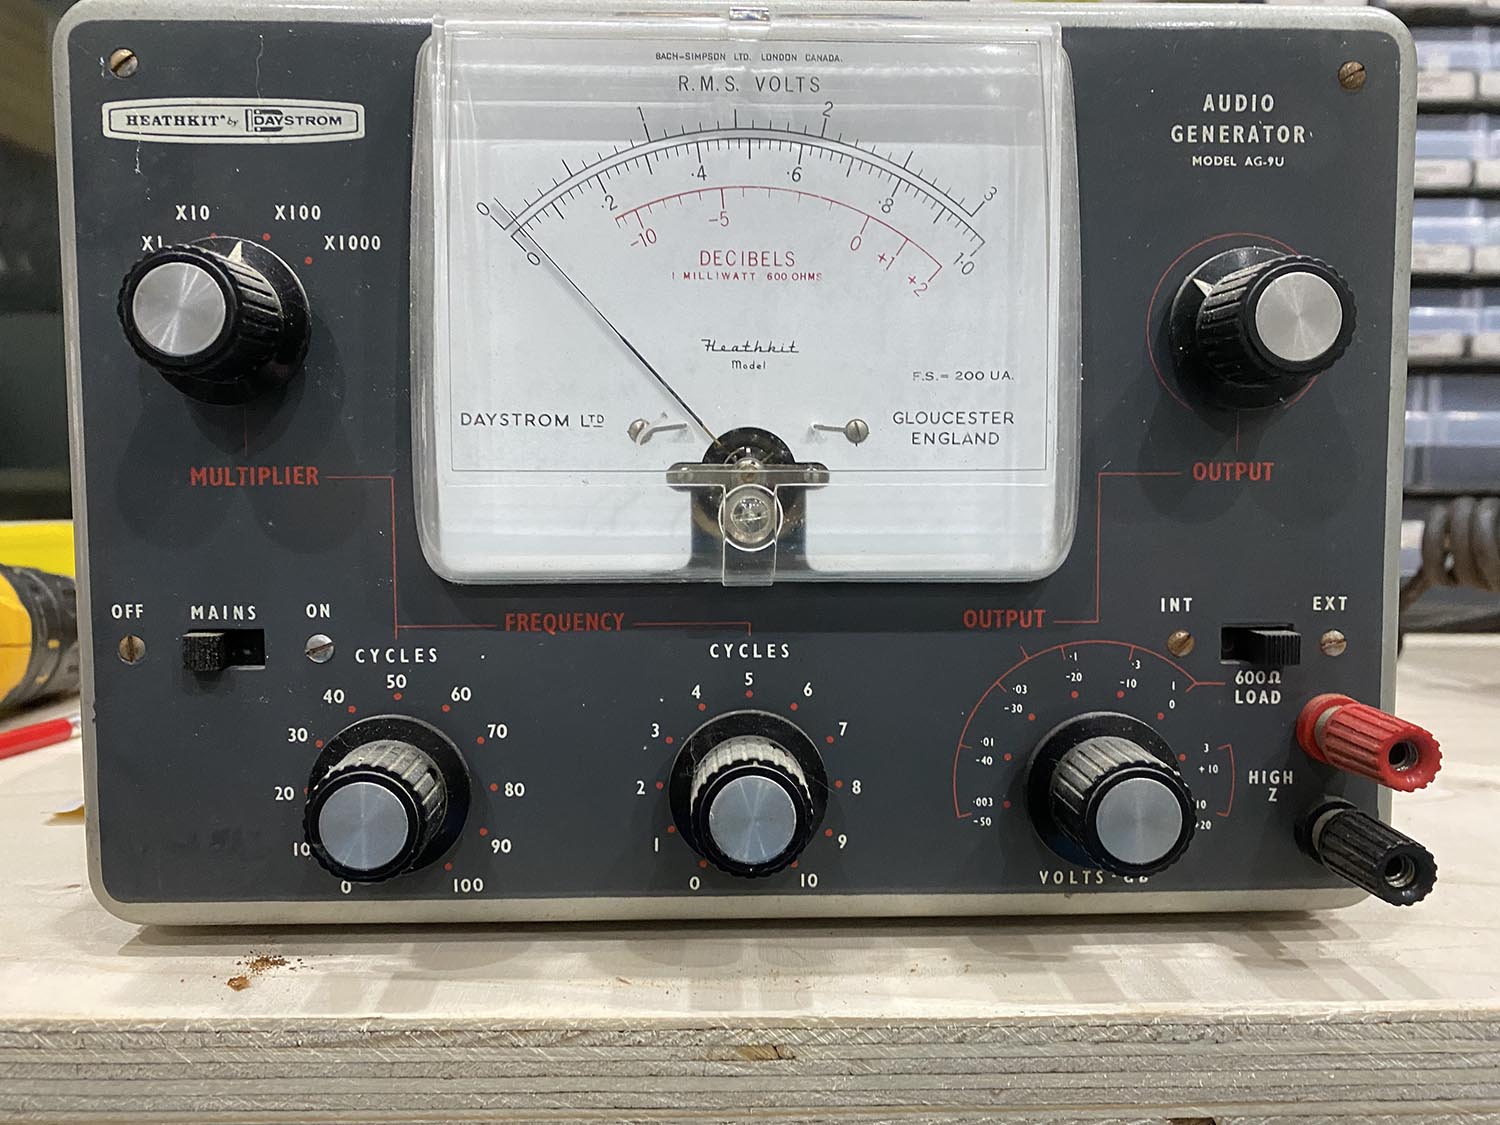 Heathkit AG-9U Audio Generator